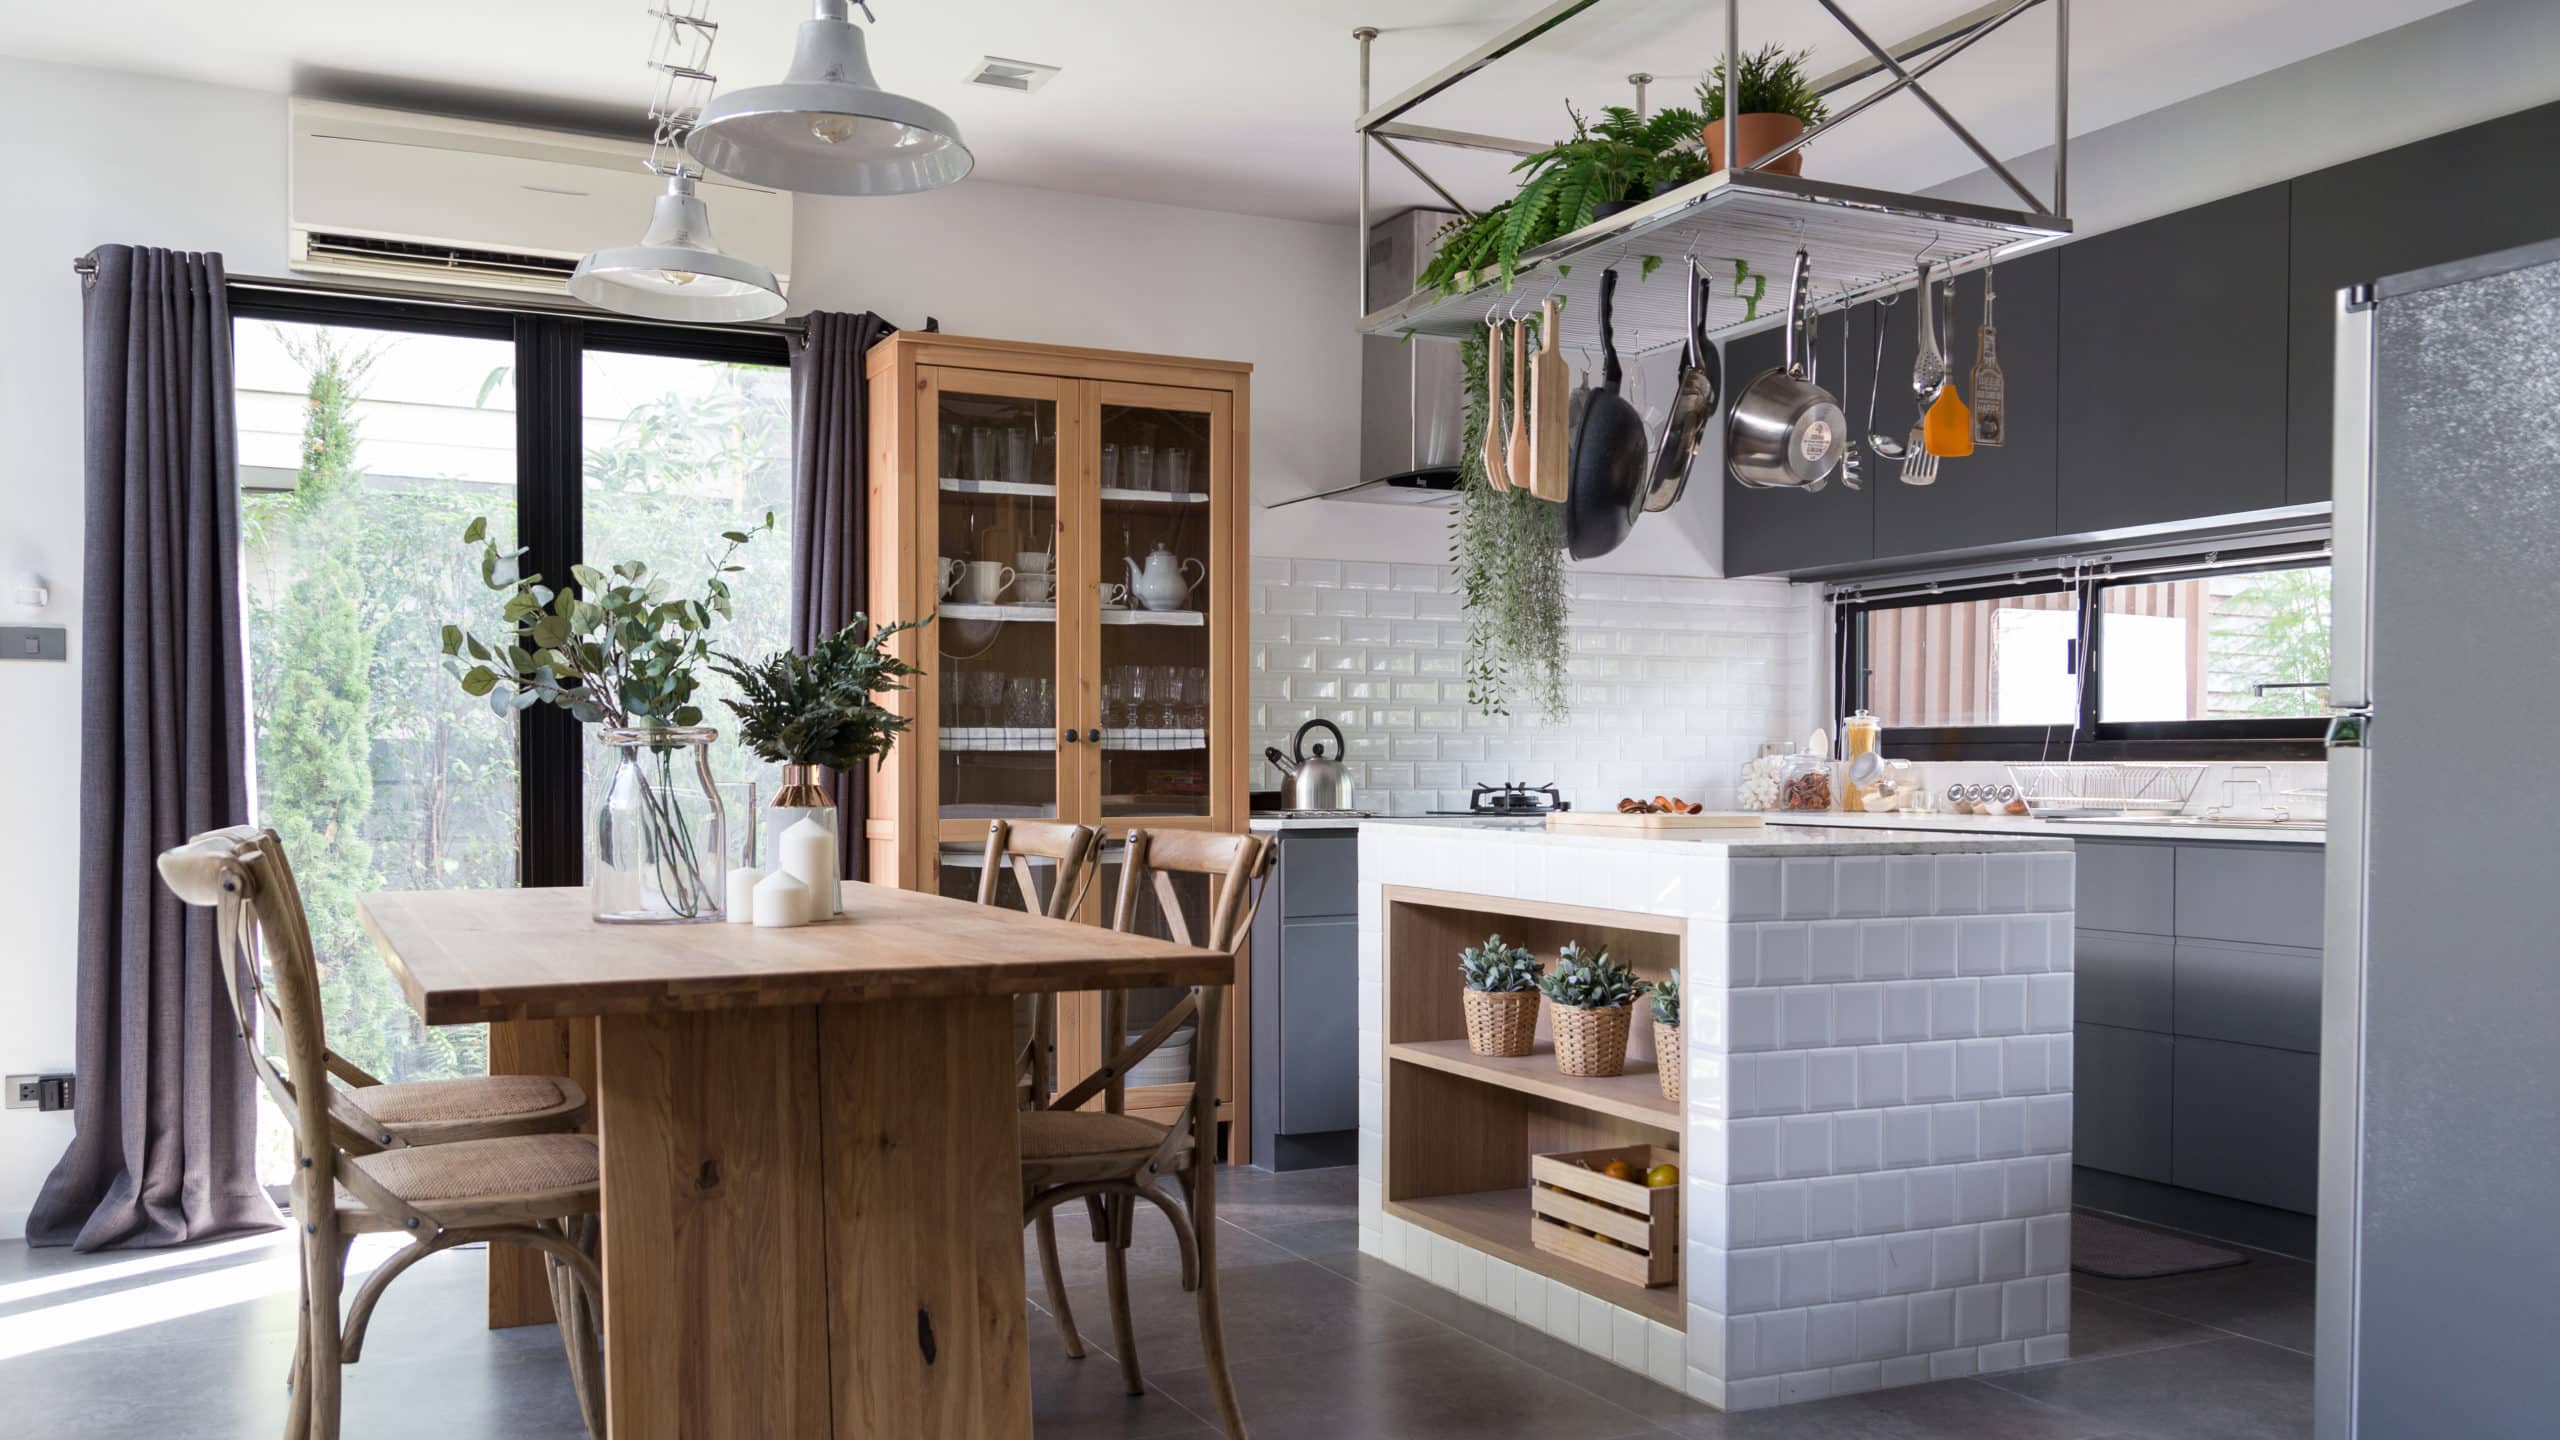 dining plus kitchen layouts; interior design styles